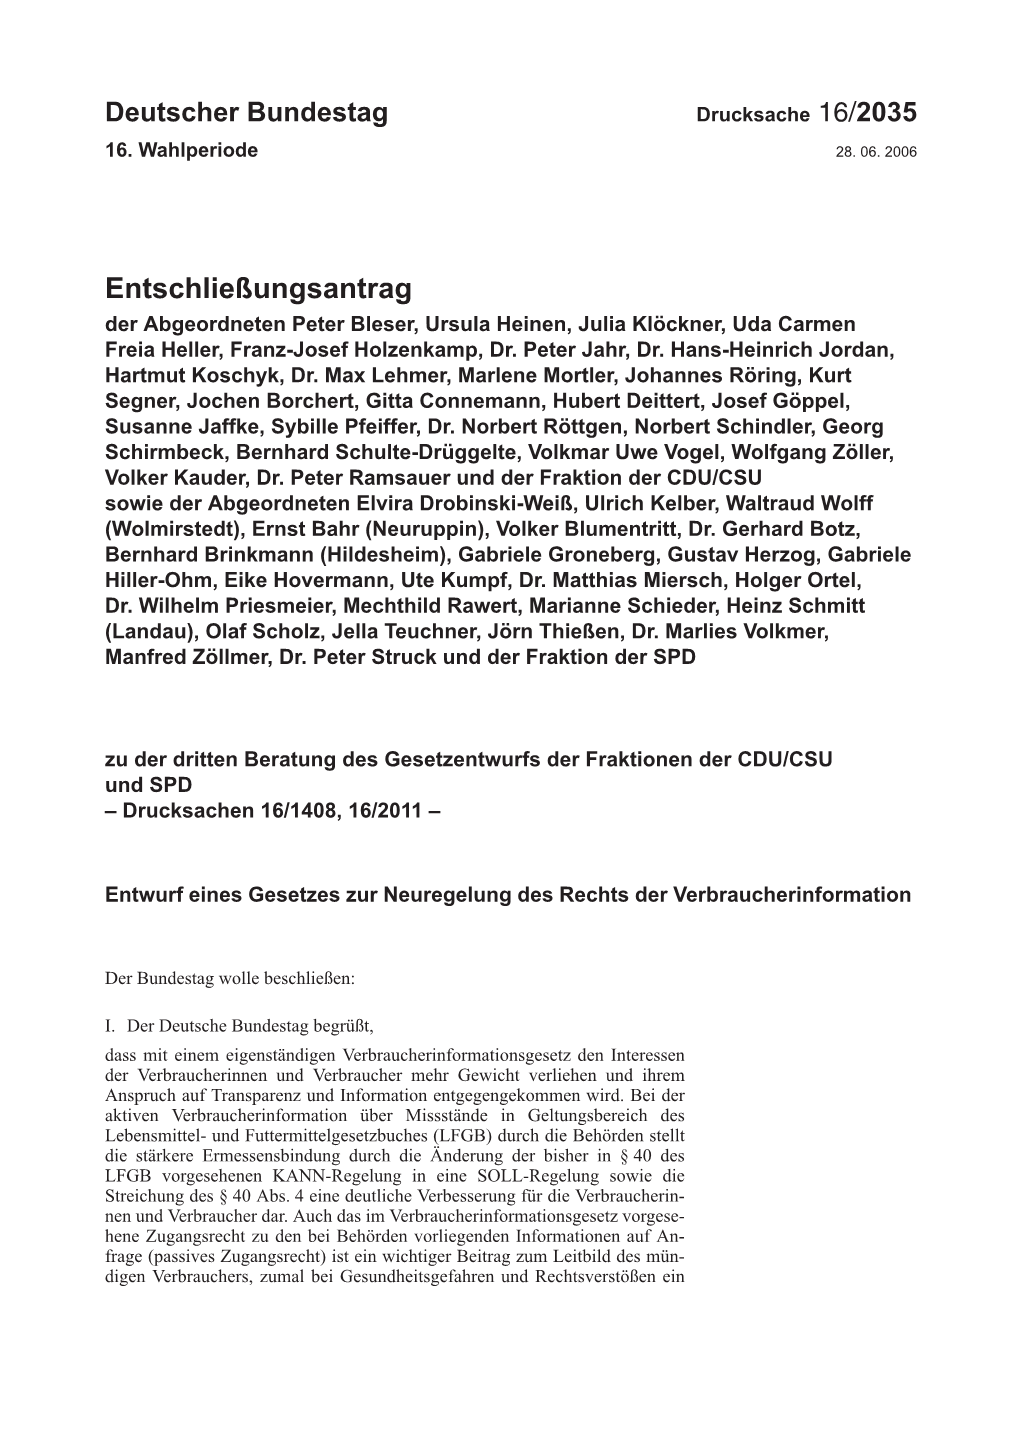 Entschließungsantrag Der Abgeordneten Peter Bleser, Ursula Heinen, Julia Klöckner, Uda Carmen Freia Heller, Franz-Josef Holzenkamp, Dr